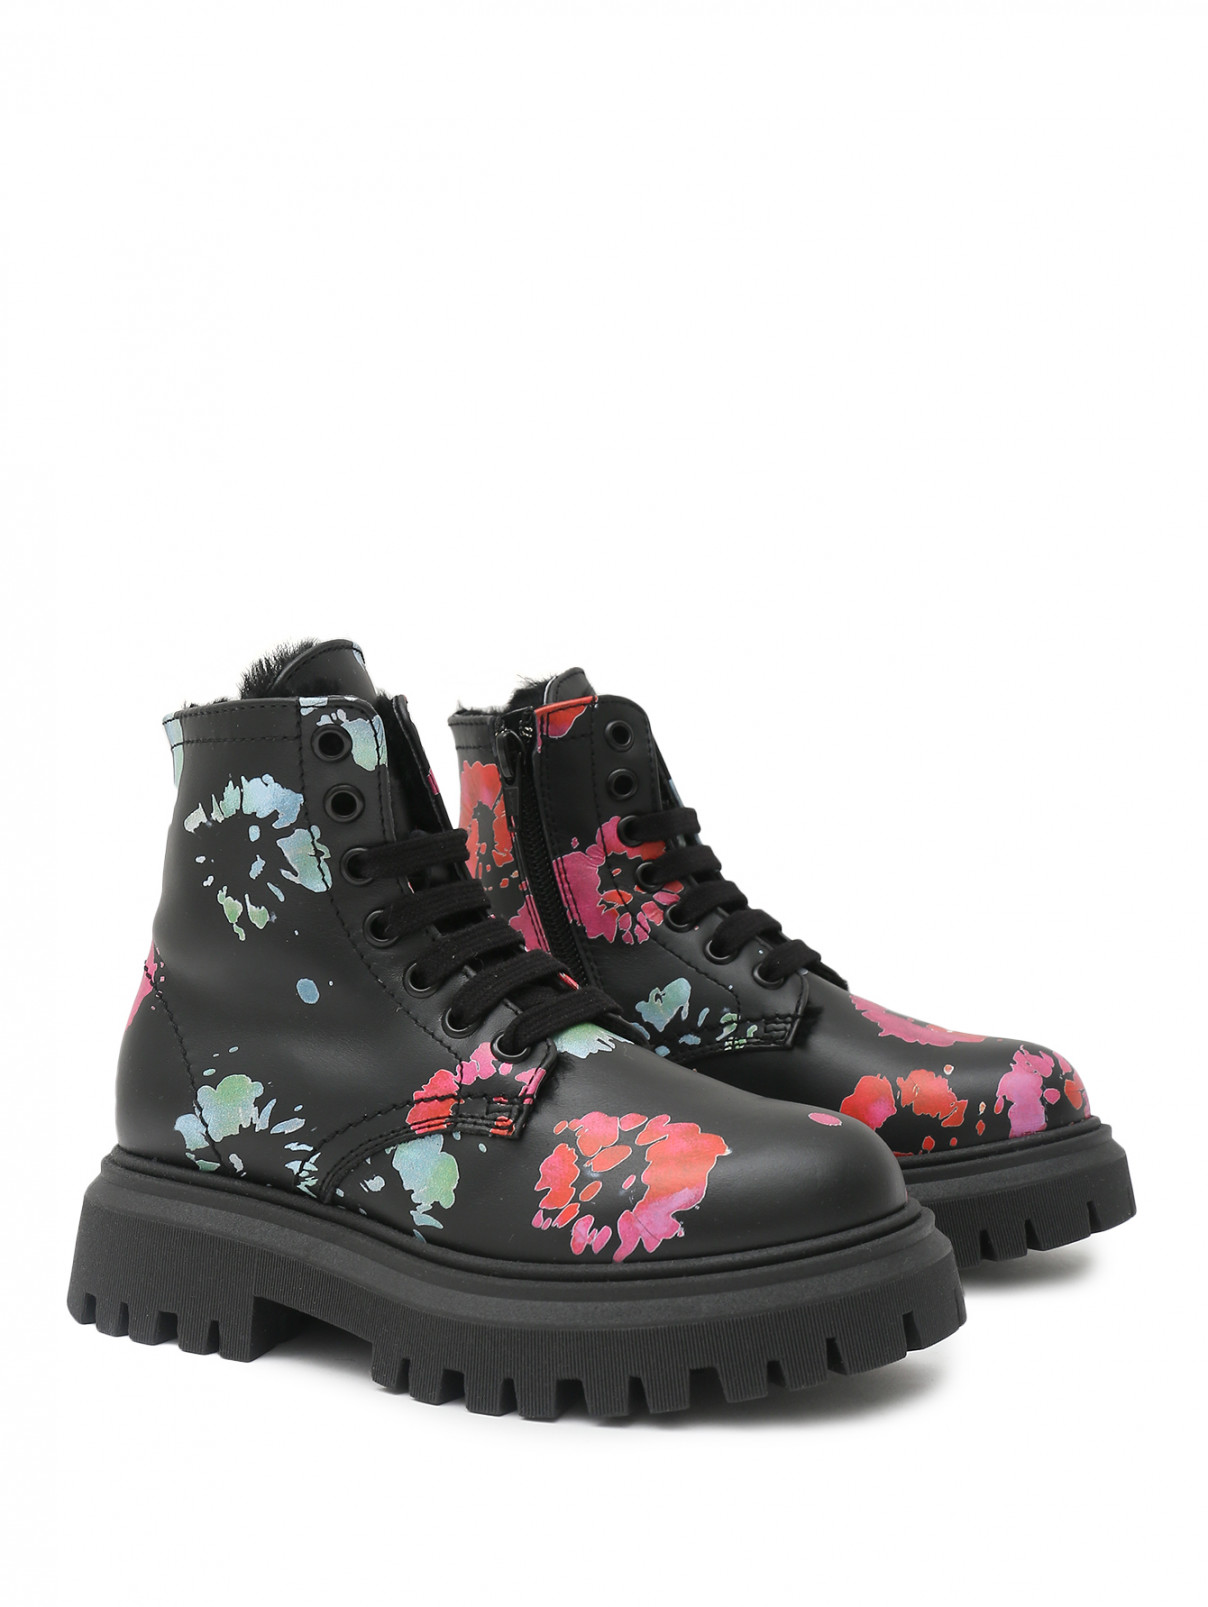 Ботинки с цветочным узором Marni  –  Общий вид  – Цвет:  Узор